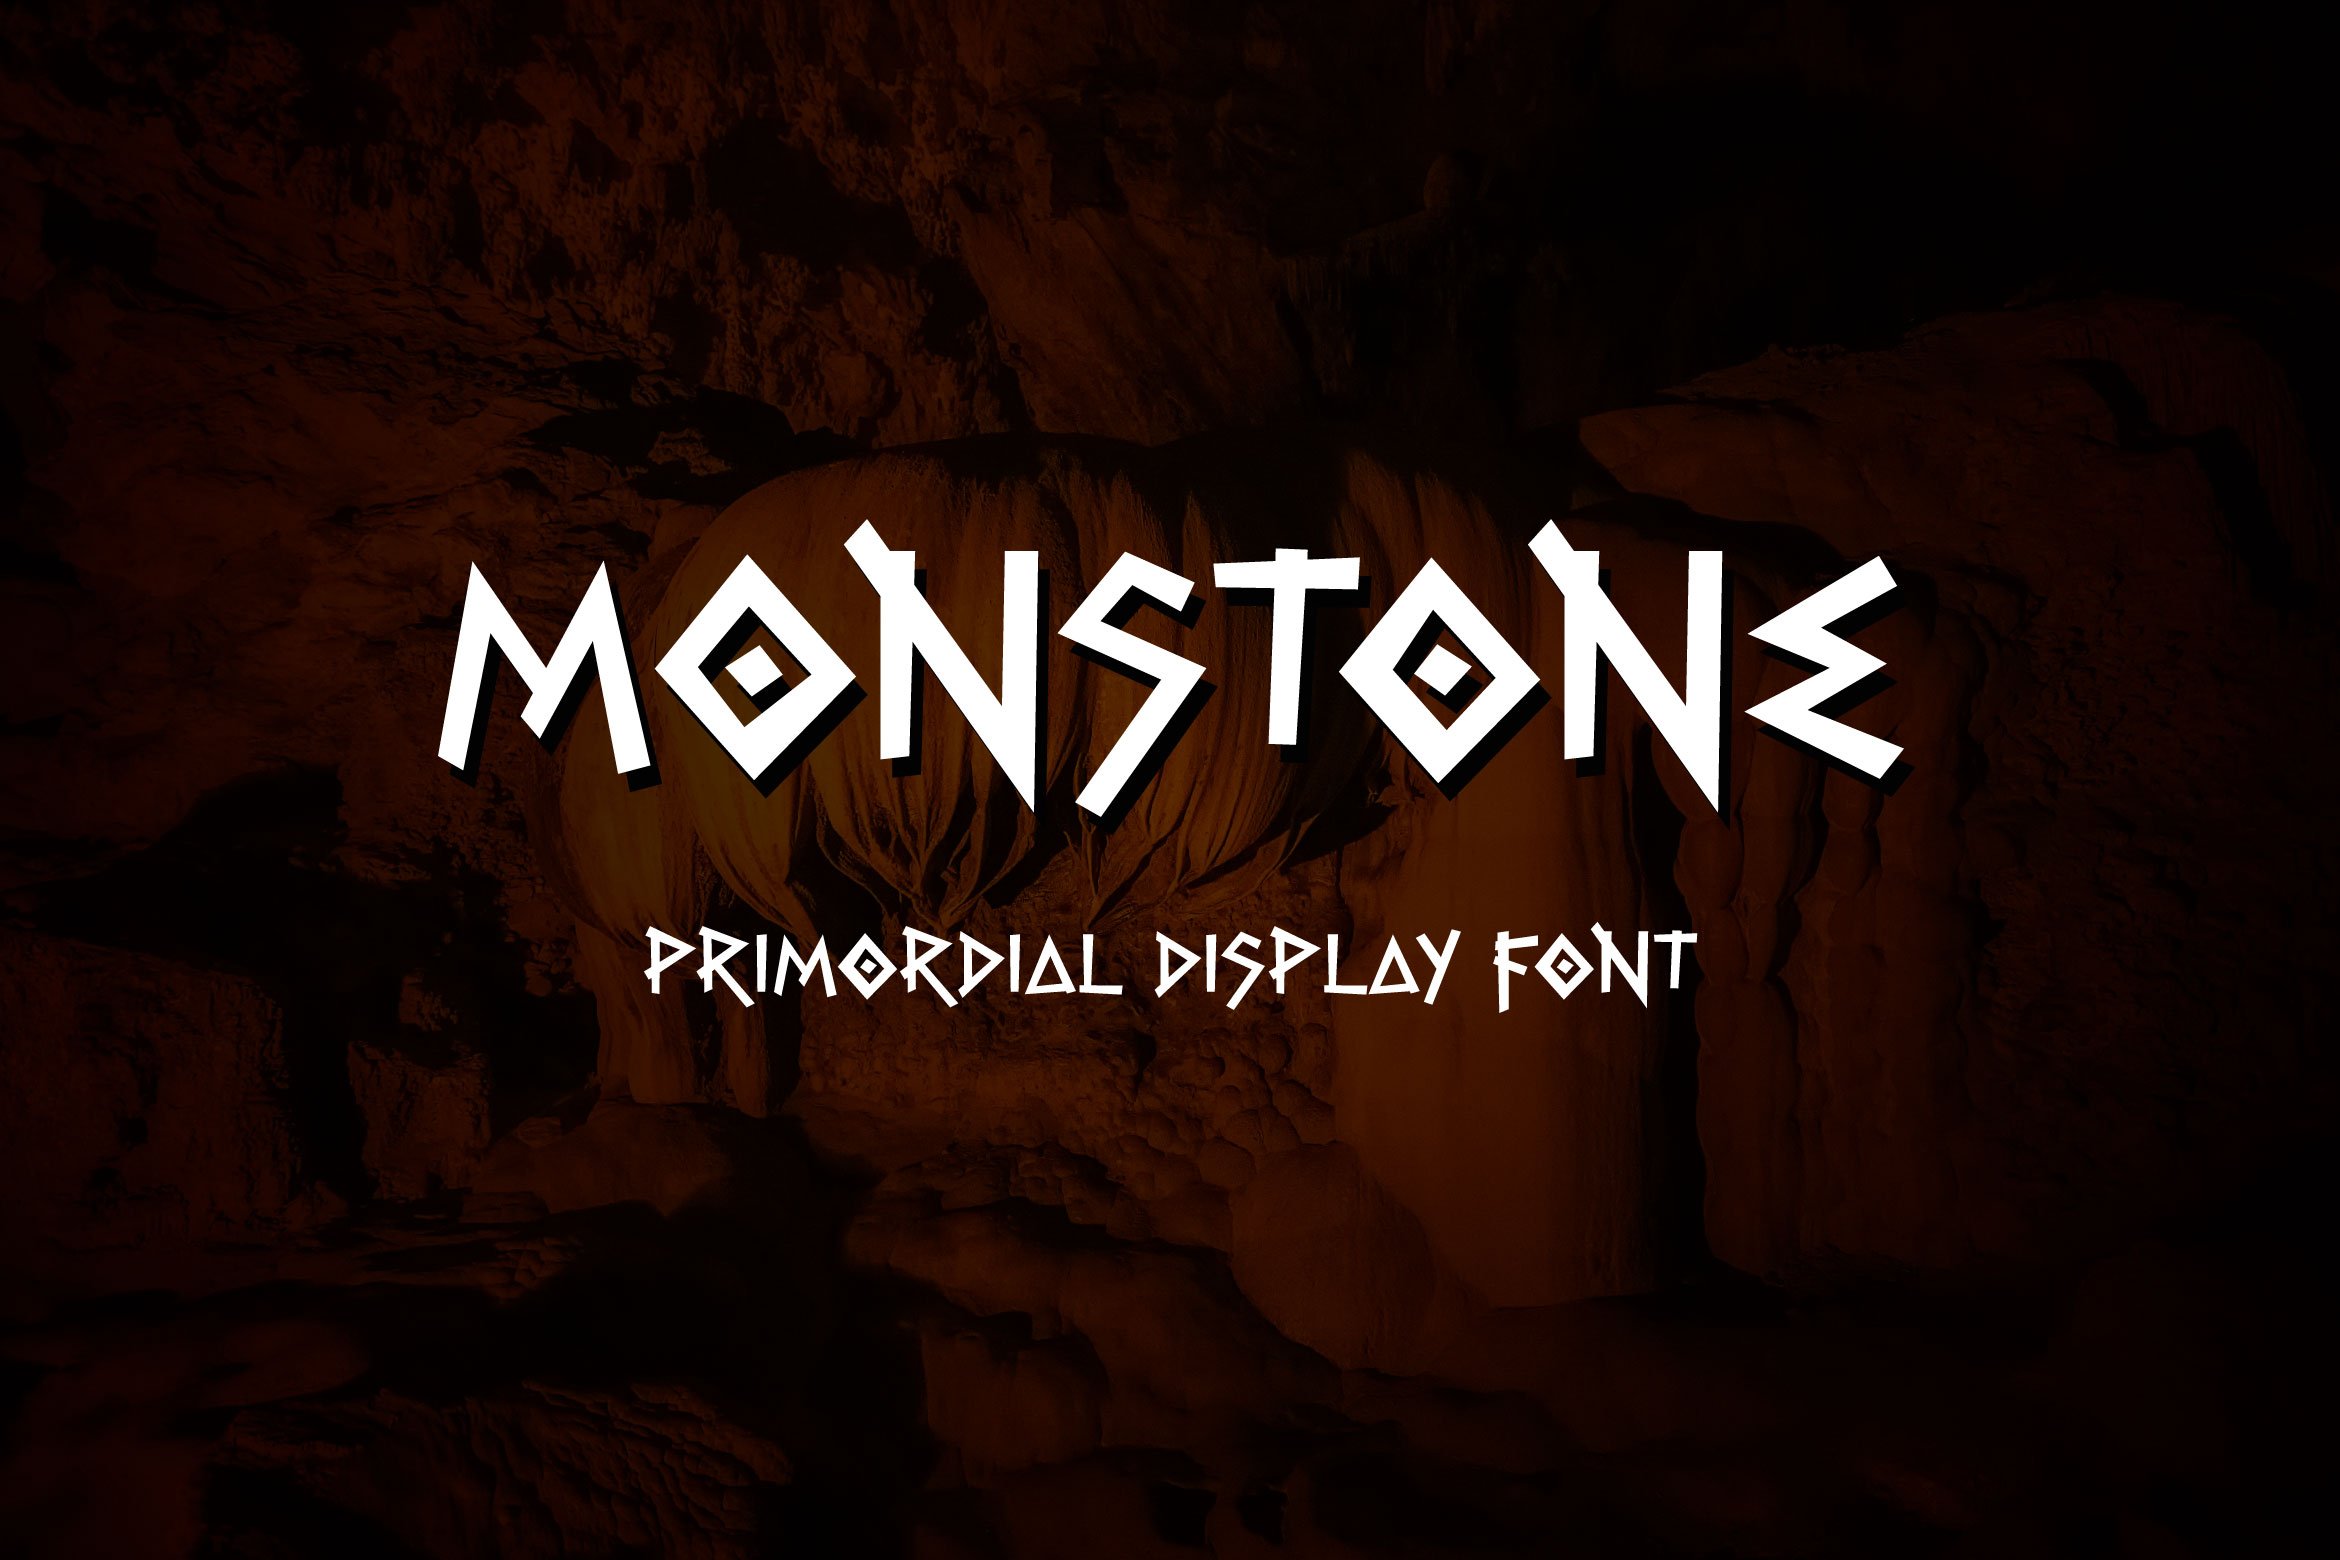 Monstone - Ancient Fantasy Font cover image.